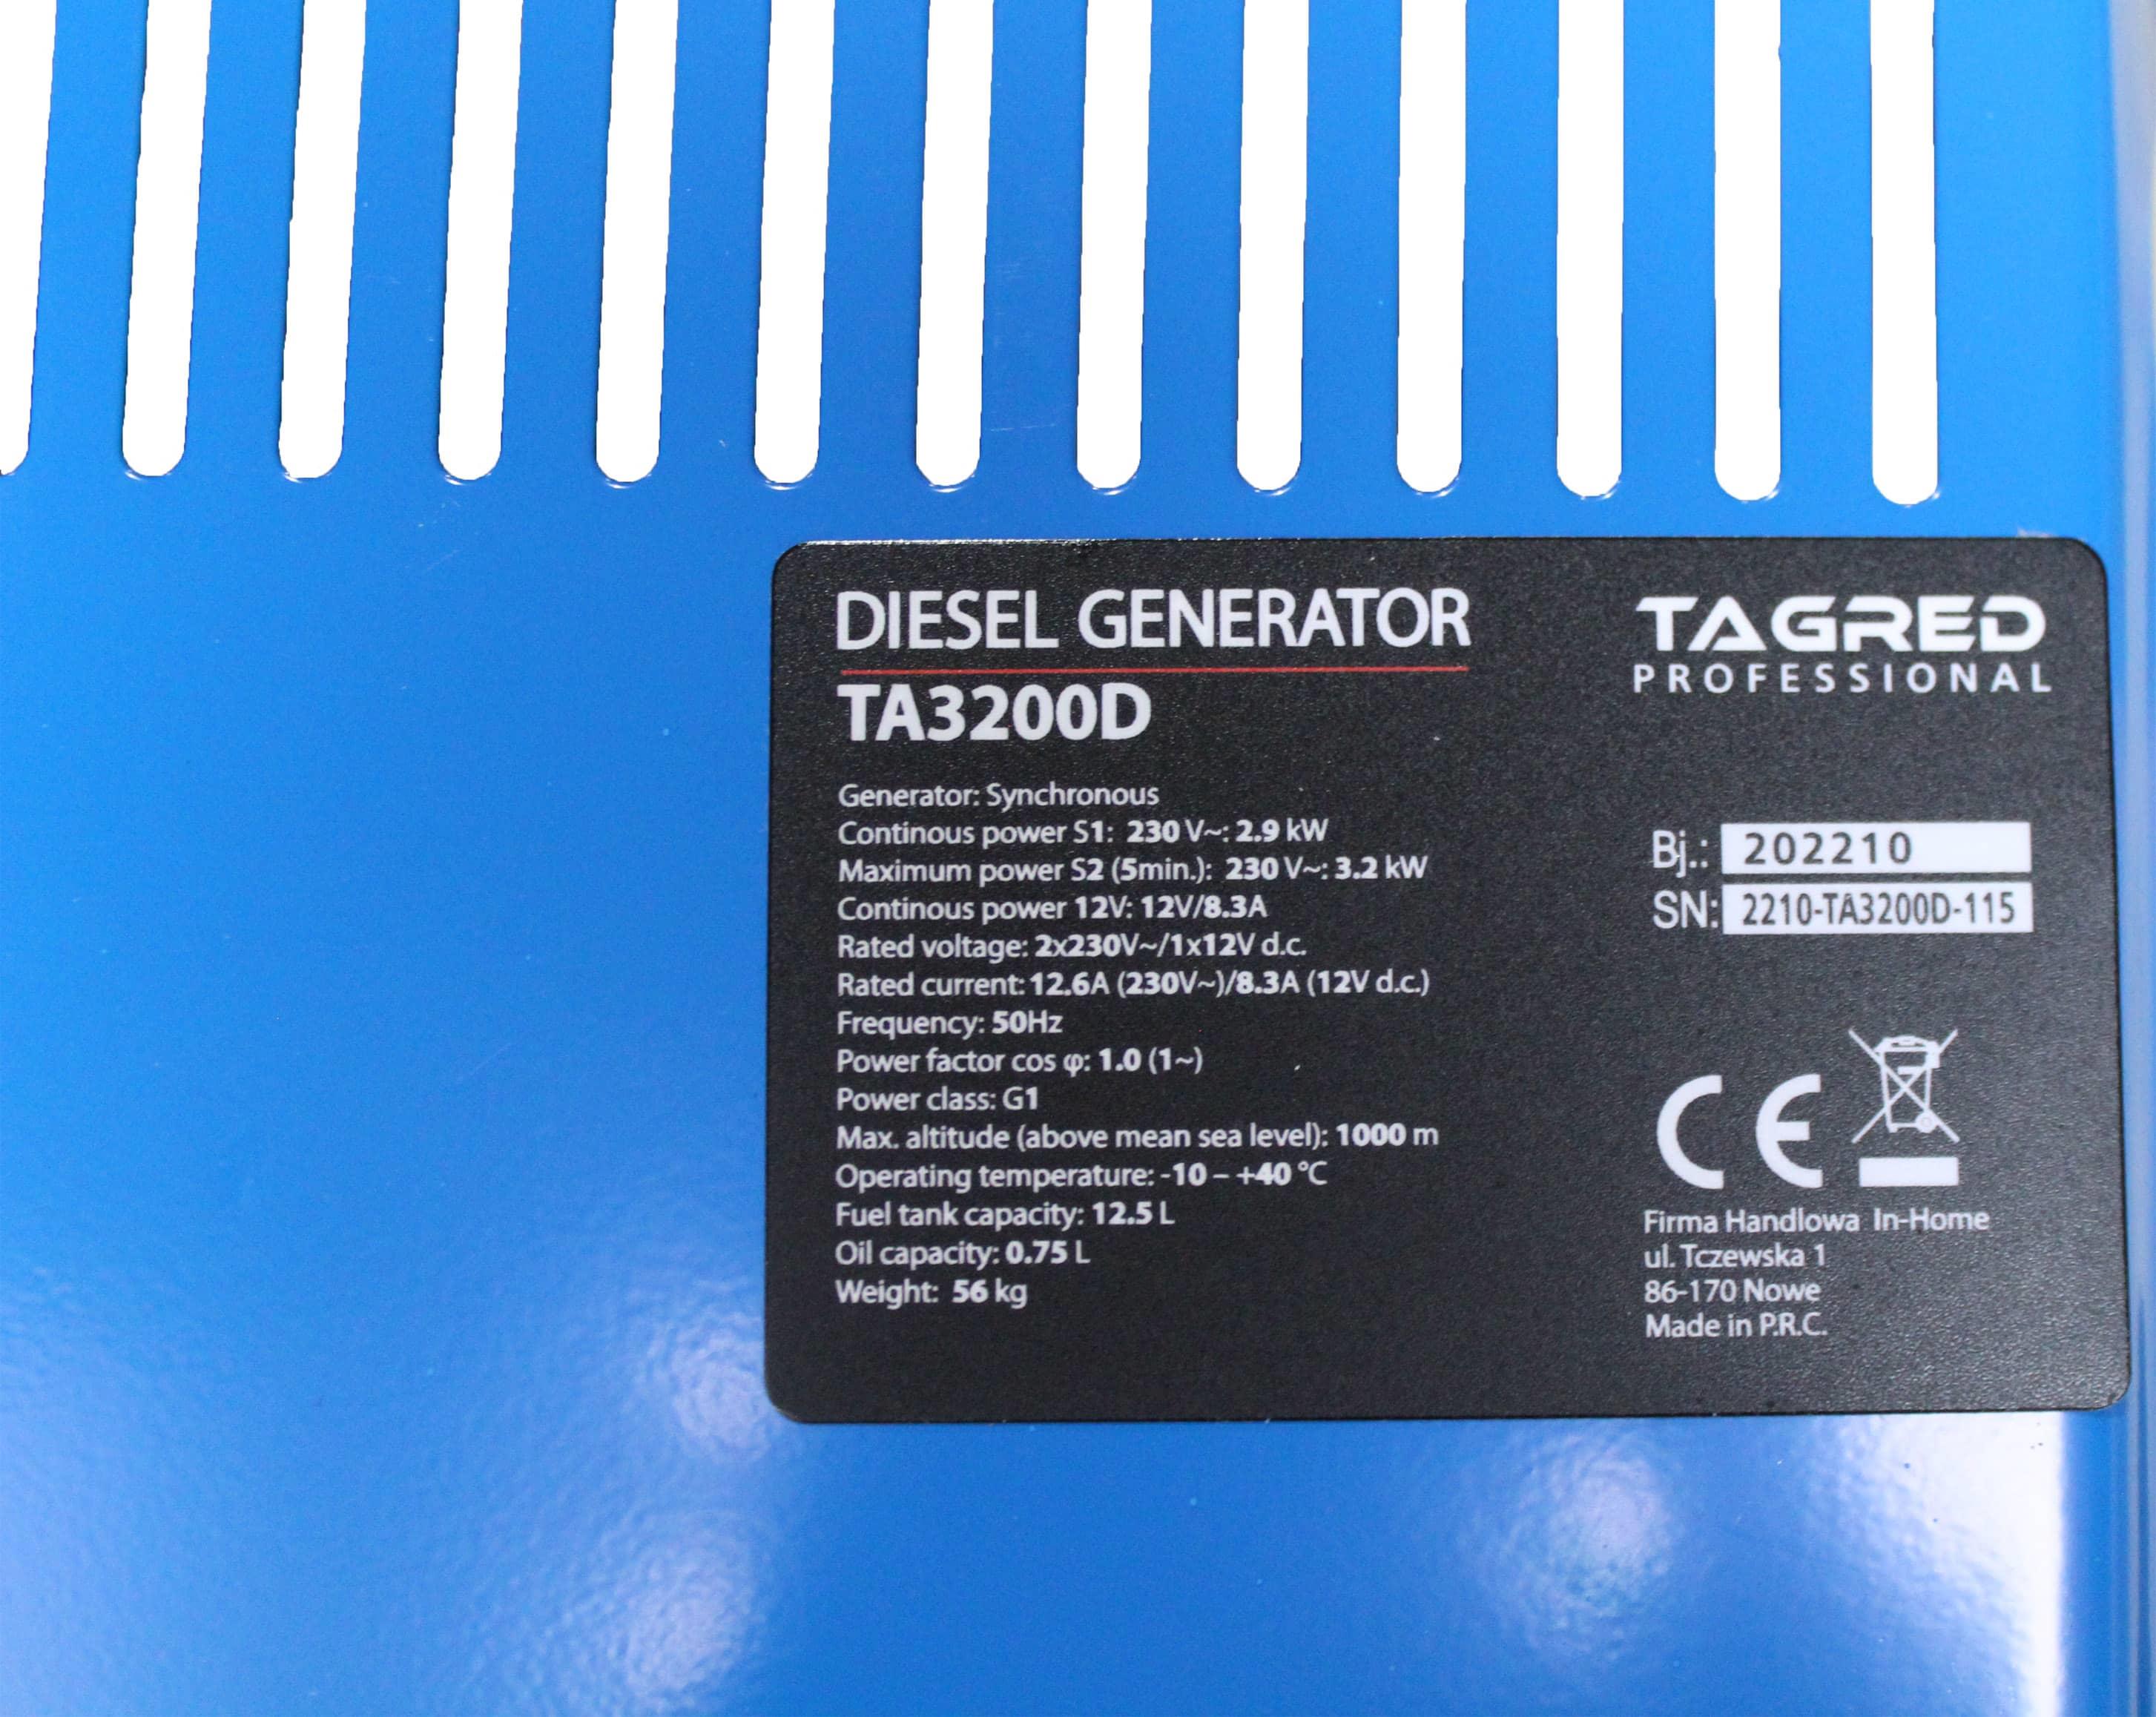 Генератор Tagred TA3200D обзор - фото 8